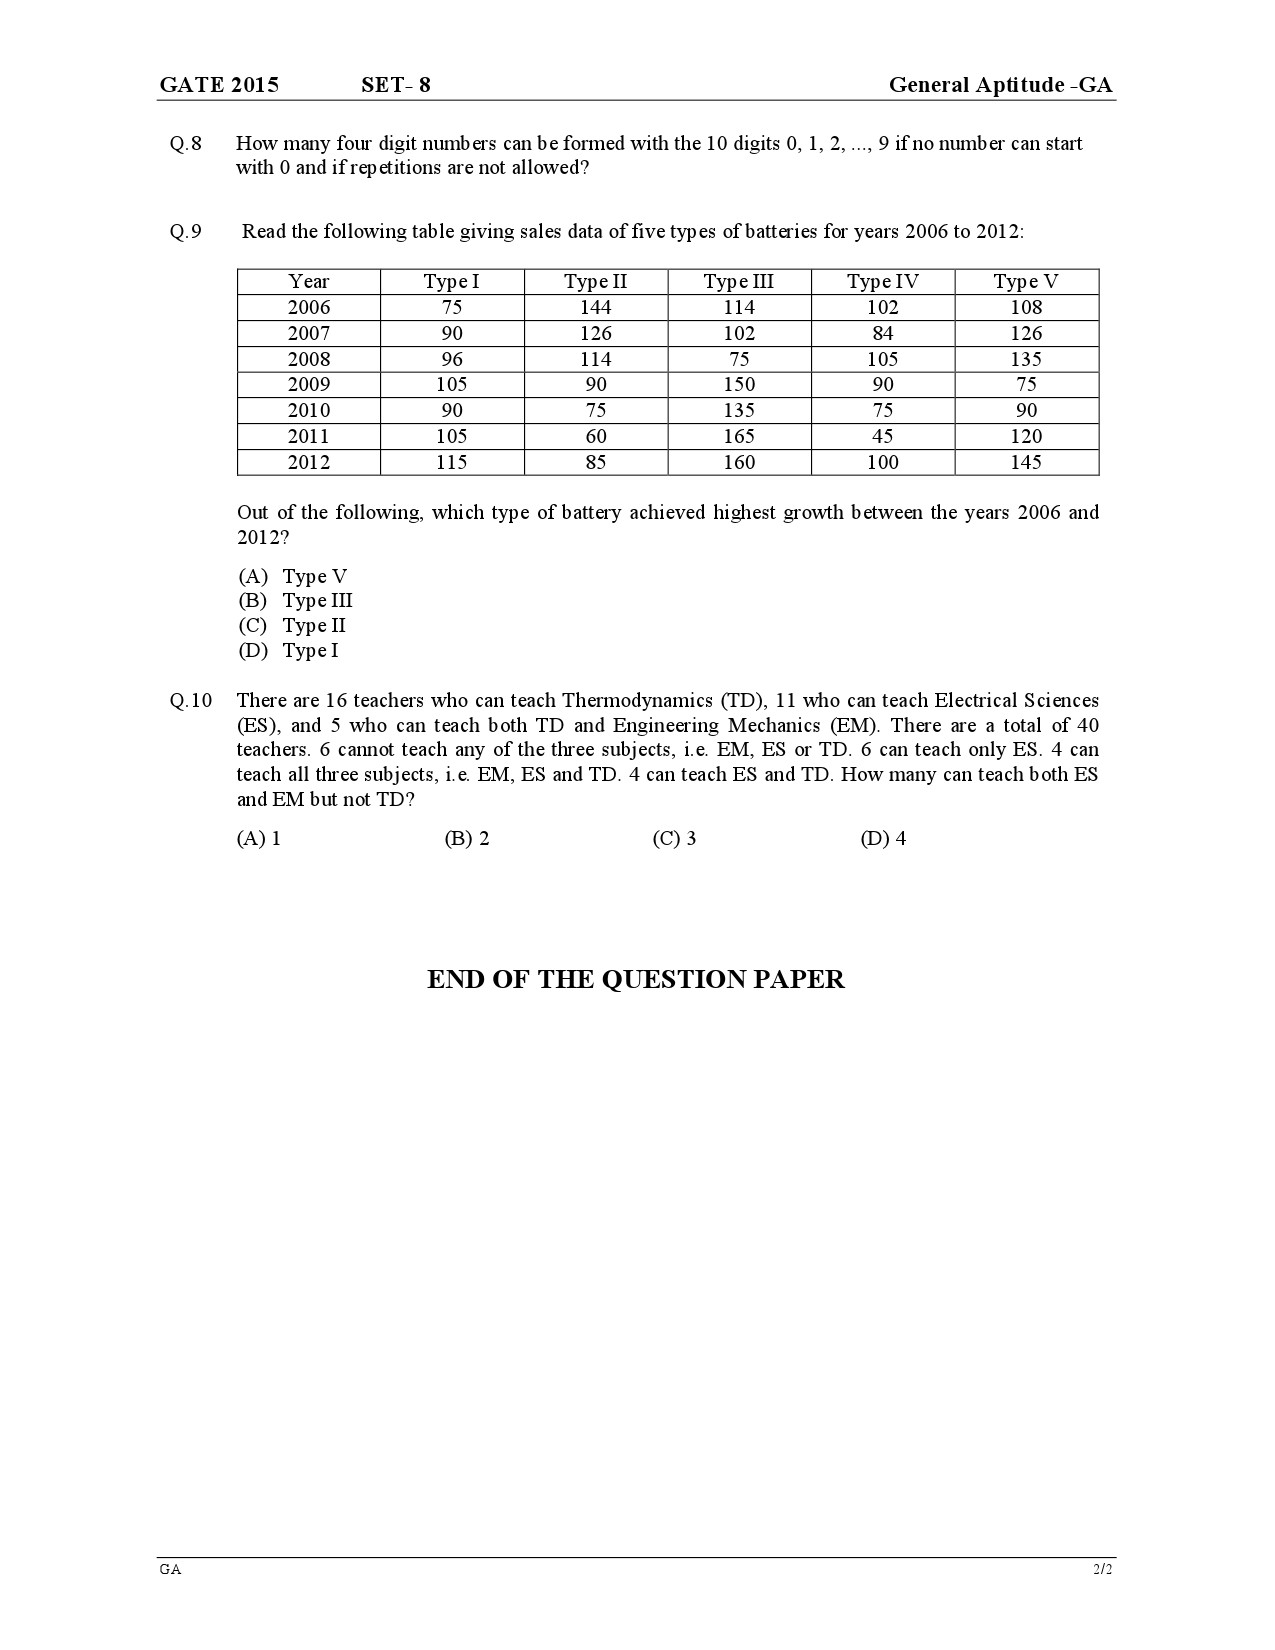 GATE Exam Question Paper 2015 General Aptitude 18